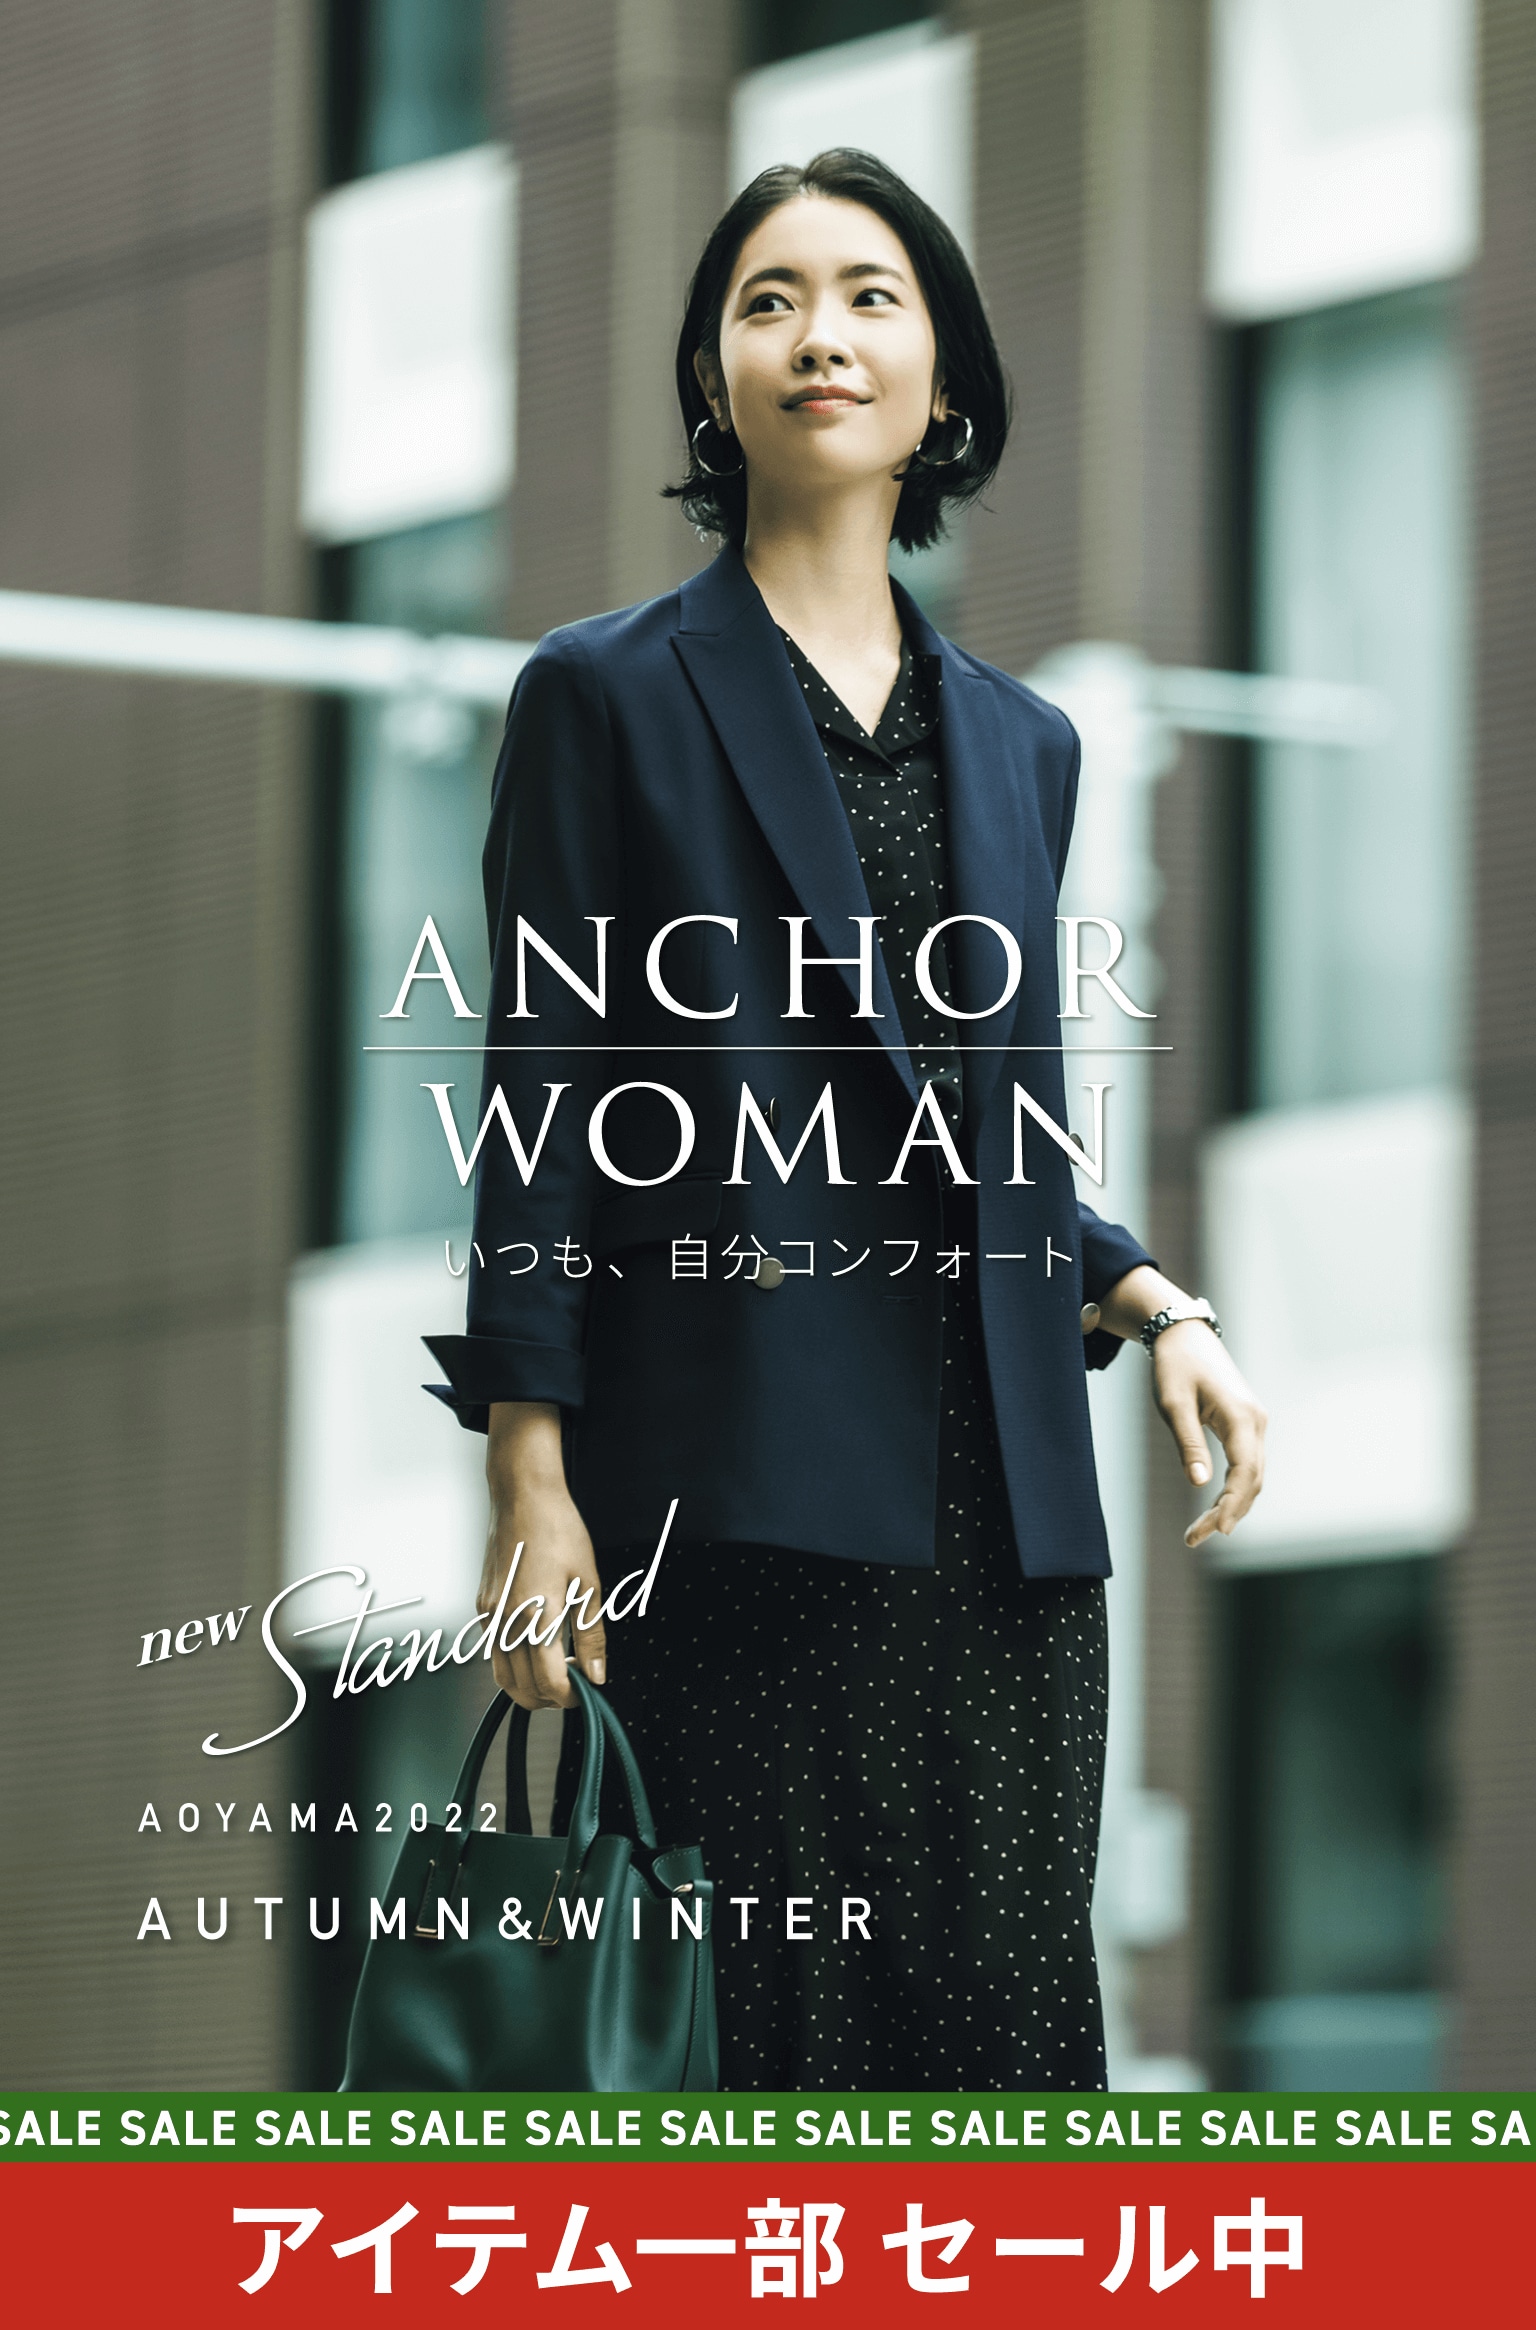 new Standard ANCHOR WOMAN AOYAMA2022 AUTUMN & WINTER | 紳士服